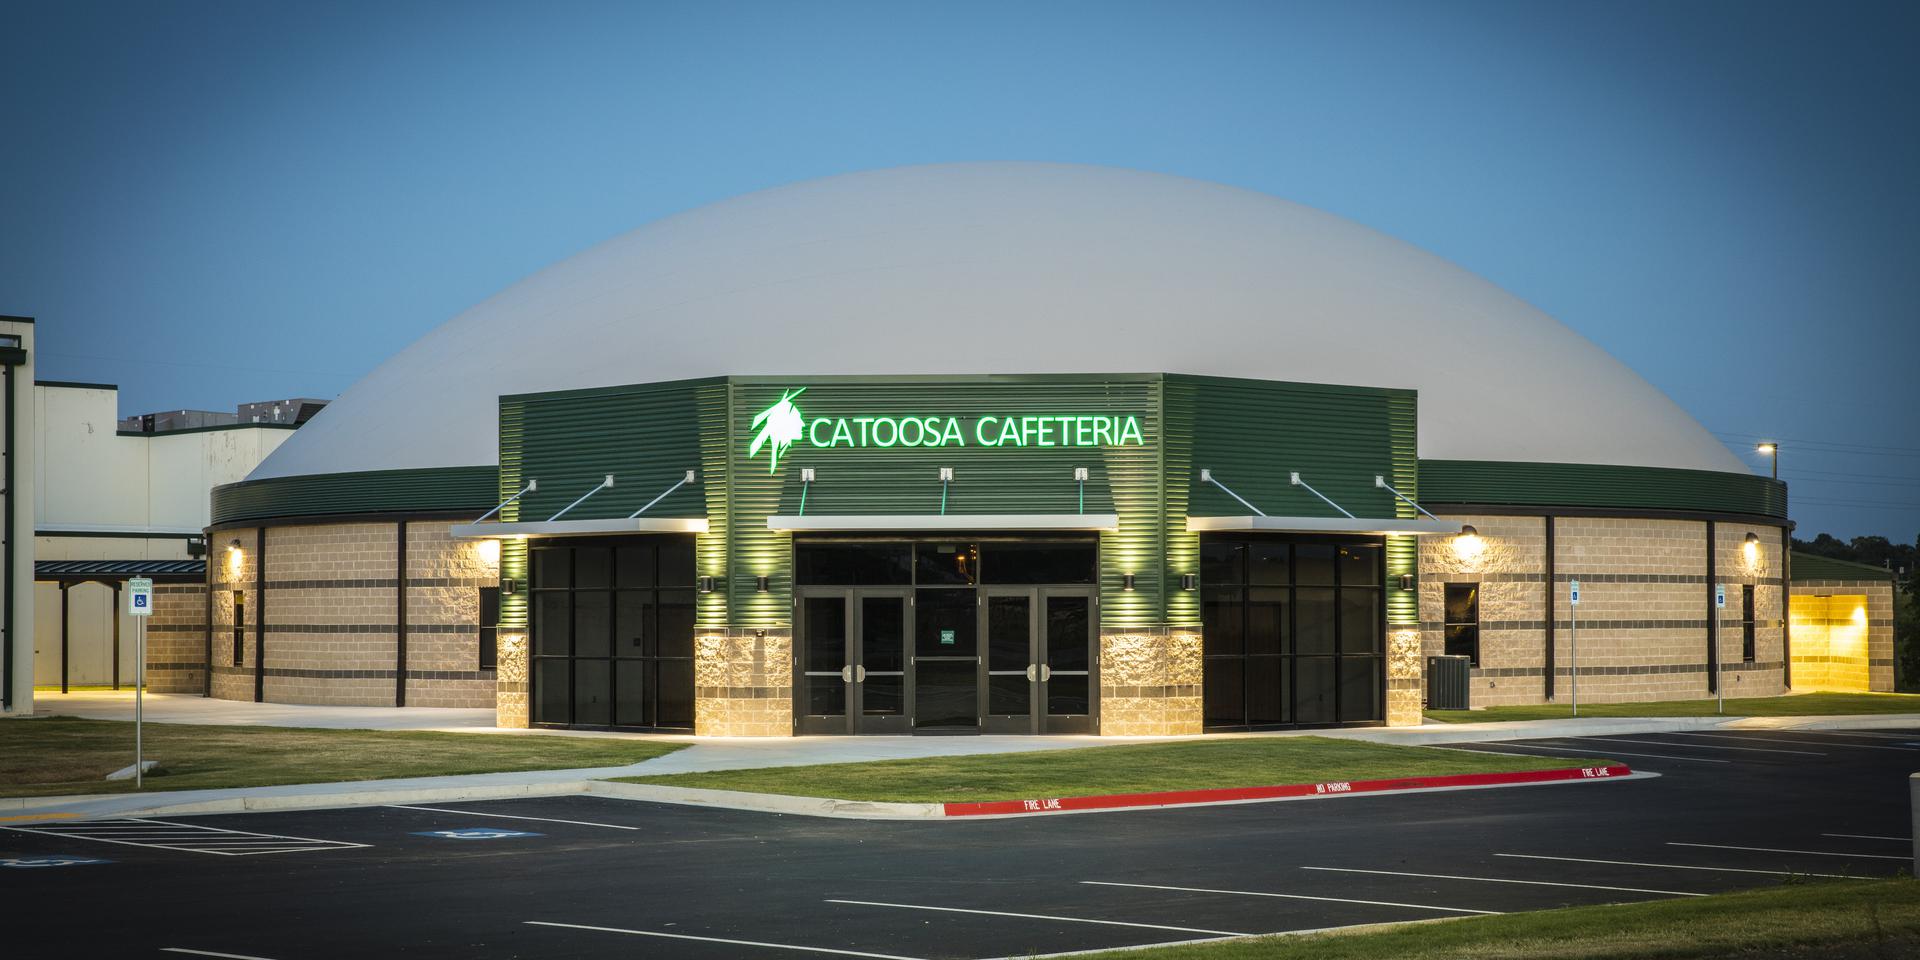 Catoosa Cafeteria Dome Storm Shelter